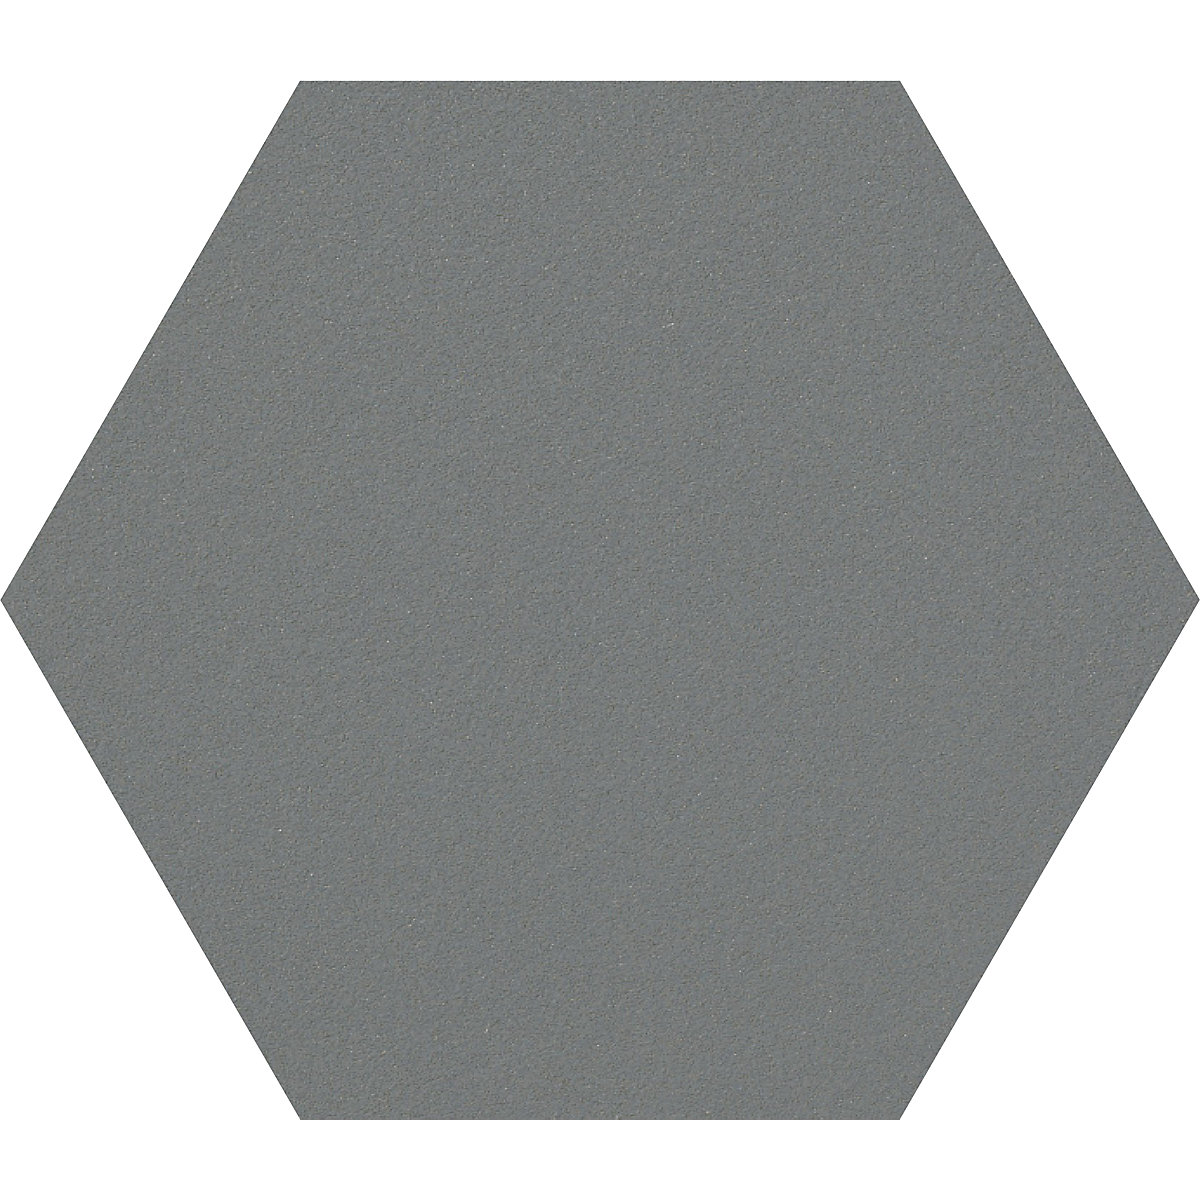 Hexagonal designer pin board – Chameleon, cork, WxH 600 x 600 mm, dark grey-30